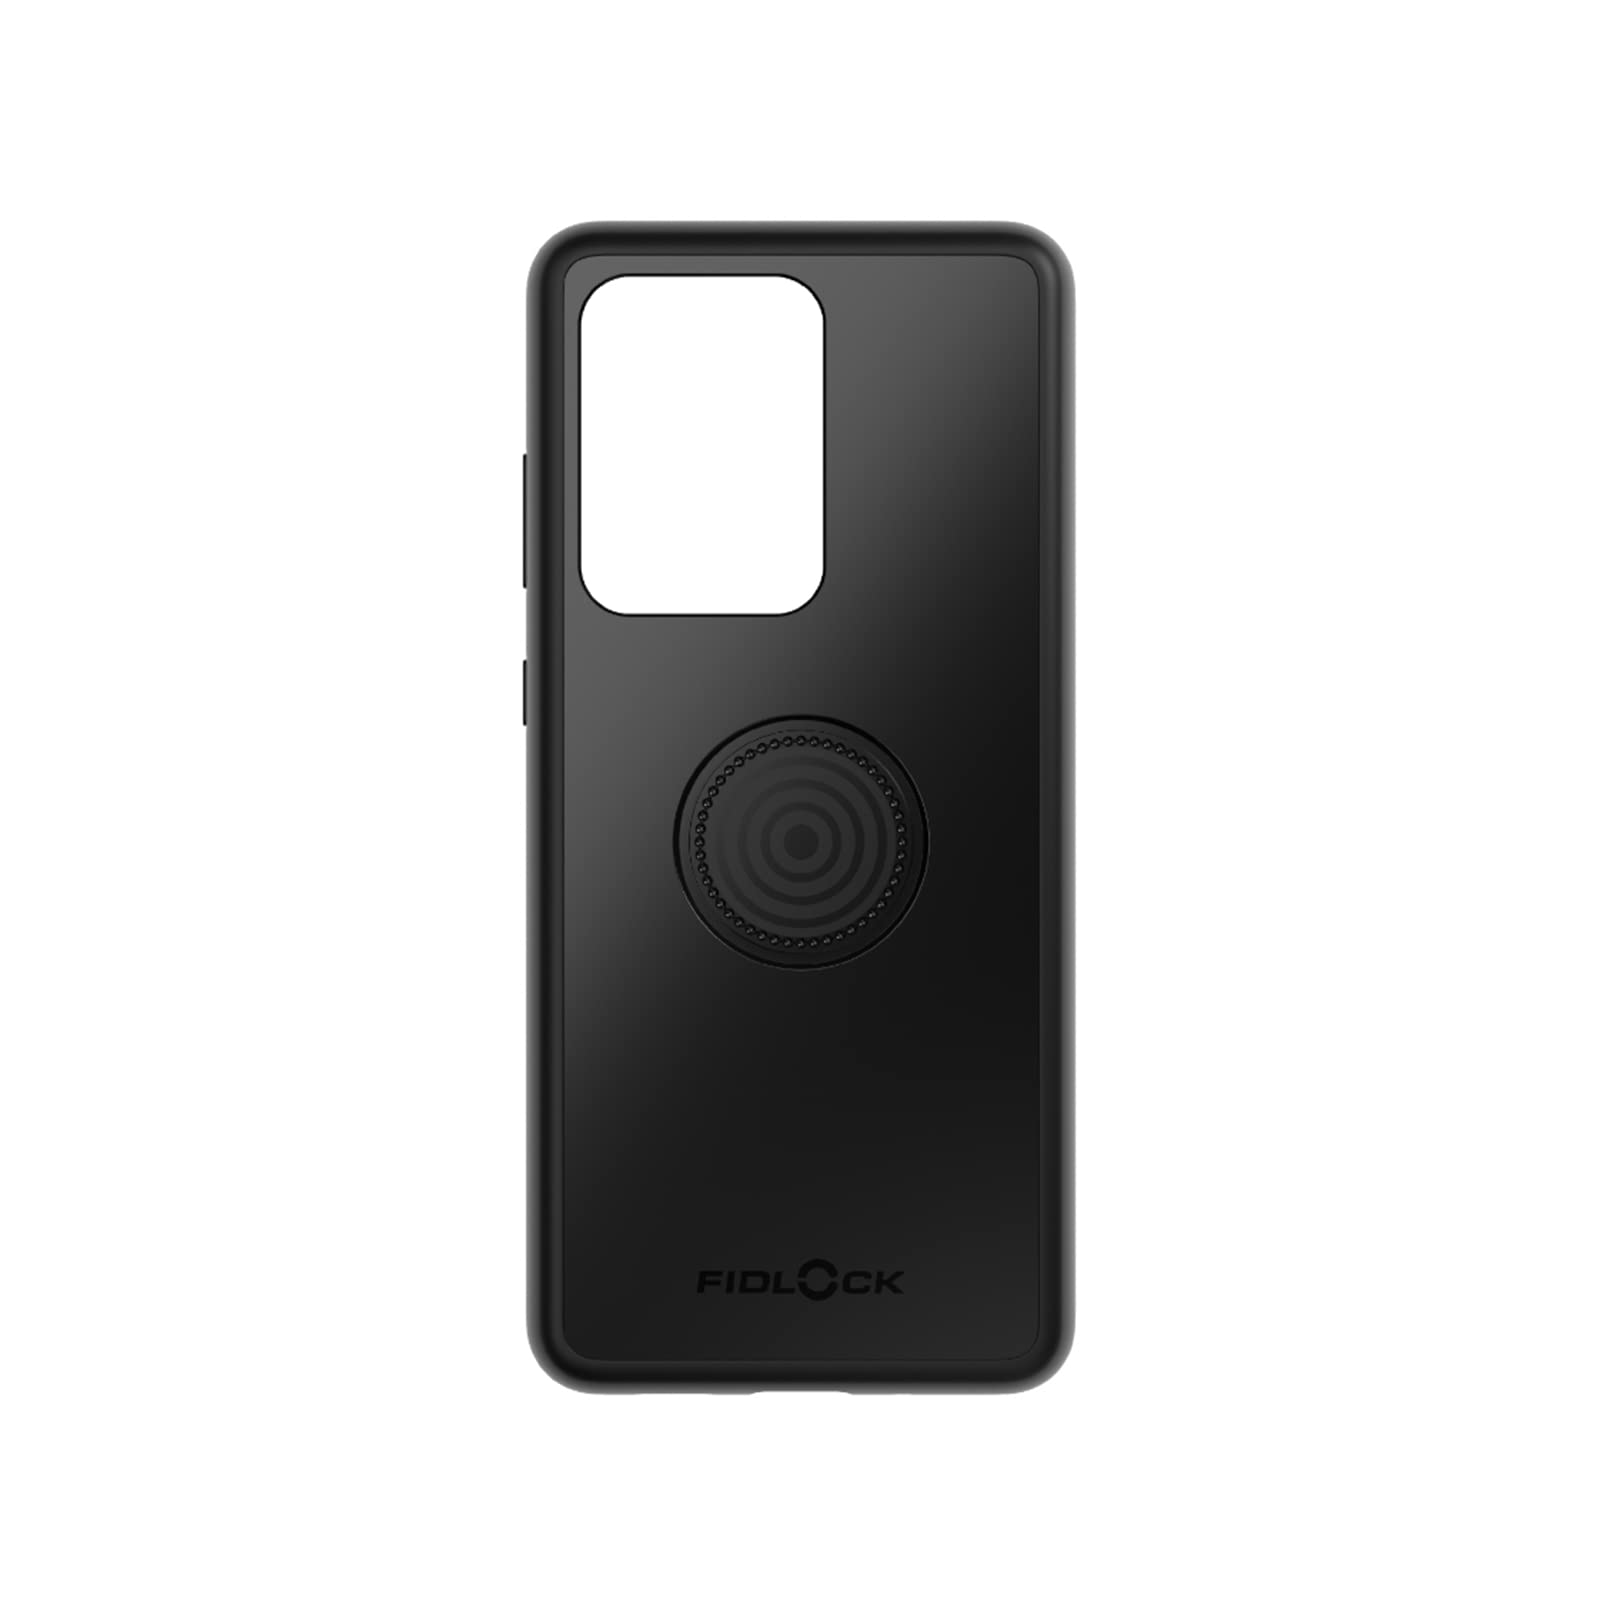 Fidlock Unisex – Erwachsene Magnetic Smartphone case for Samsung Galaxy S20 Ultra Phone